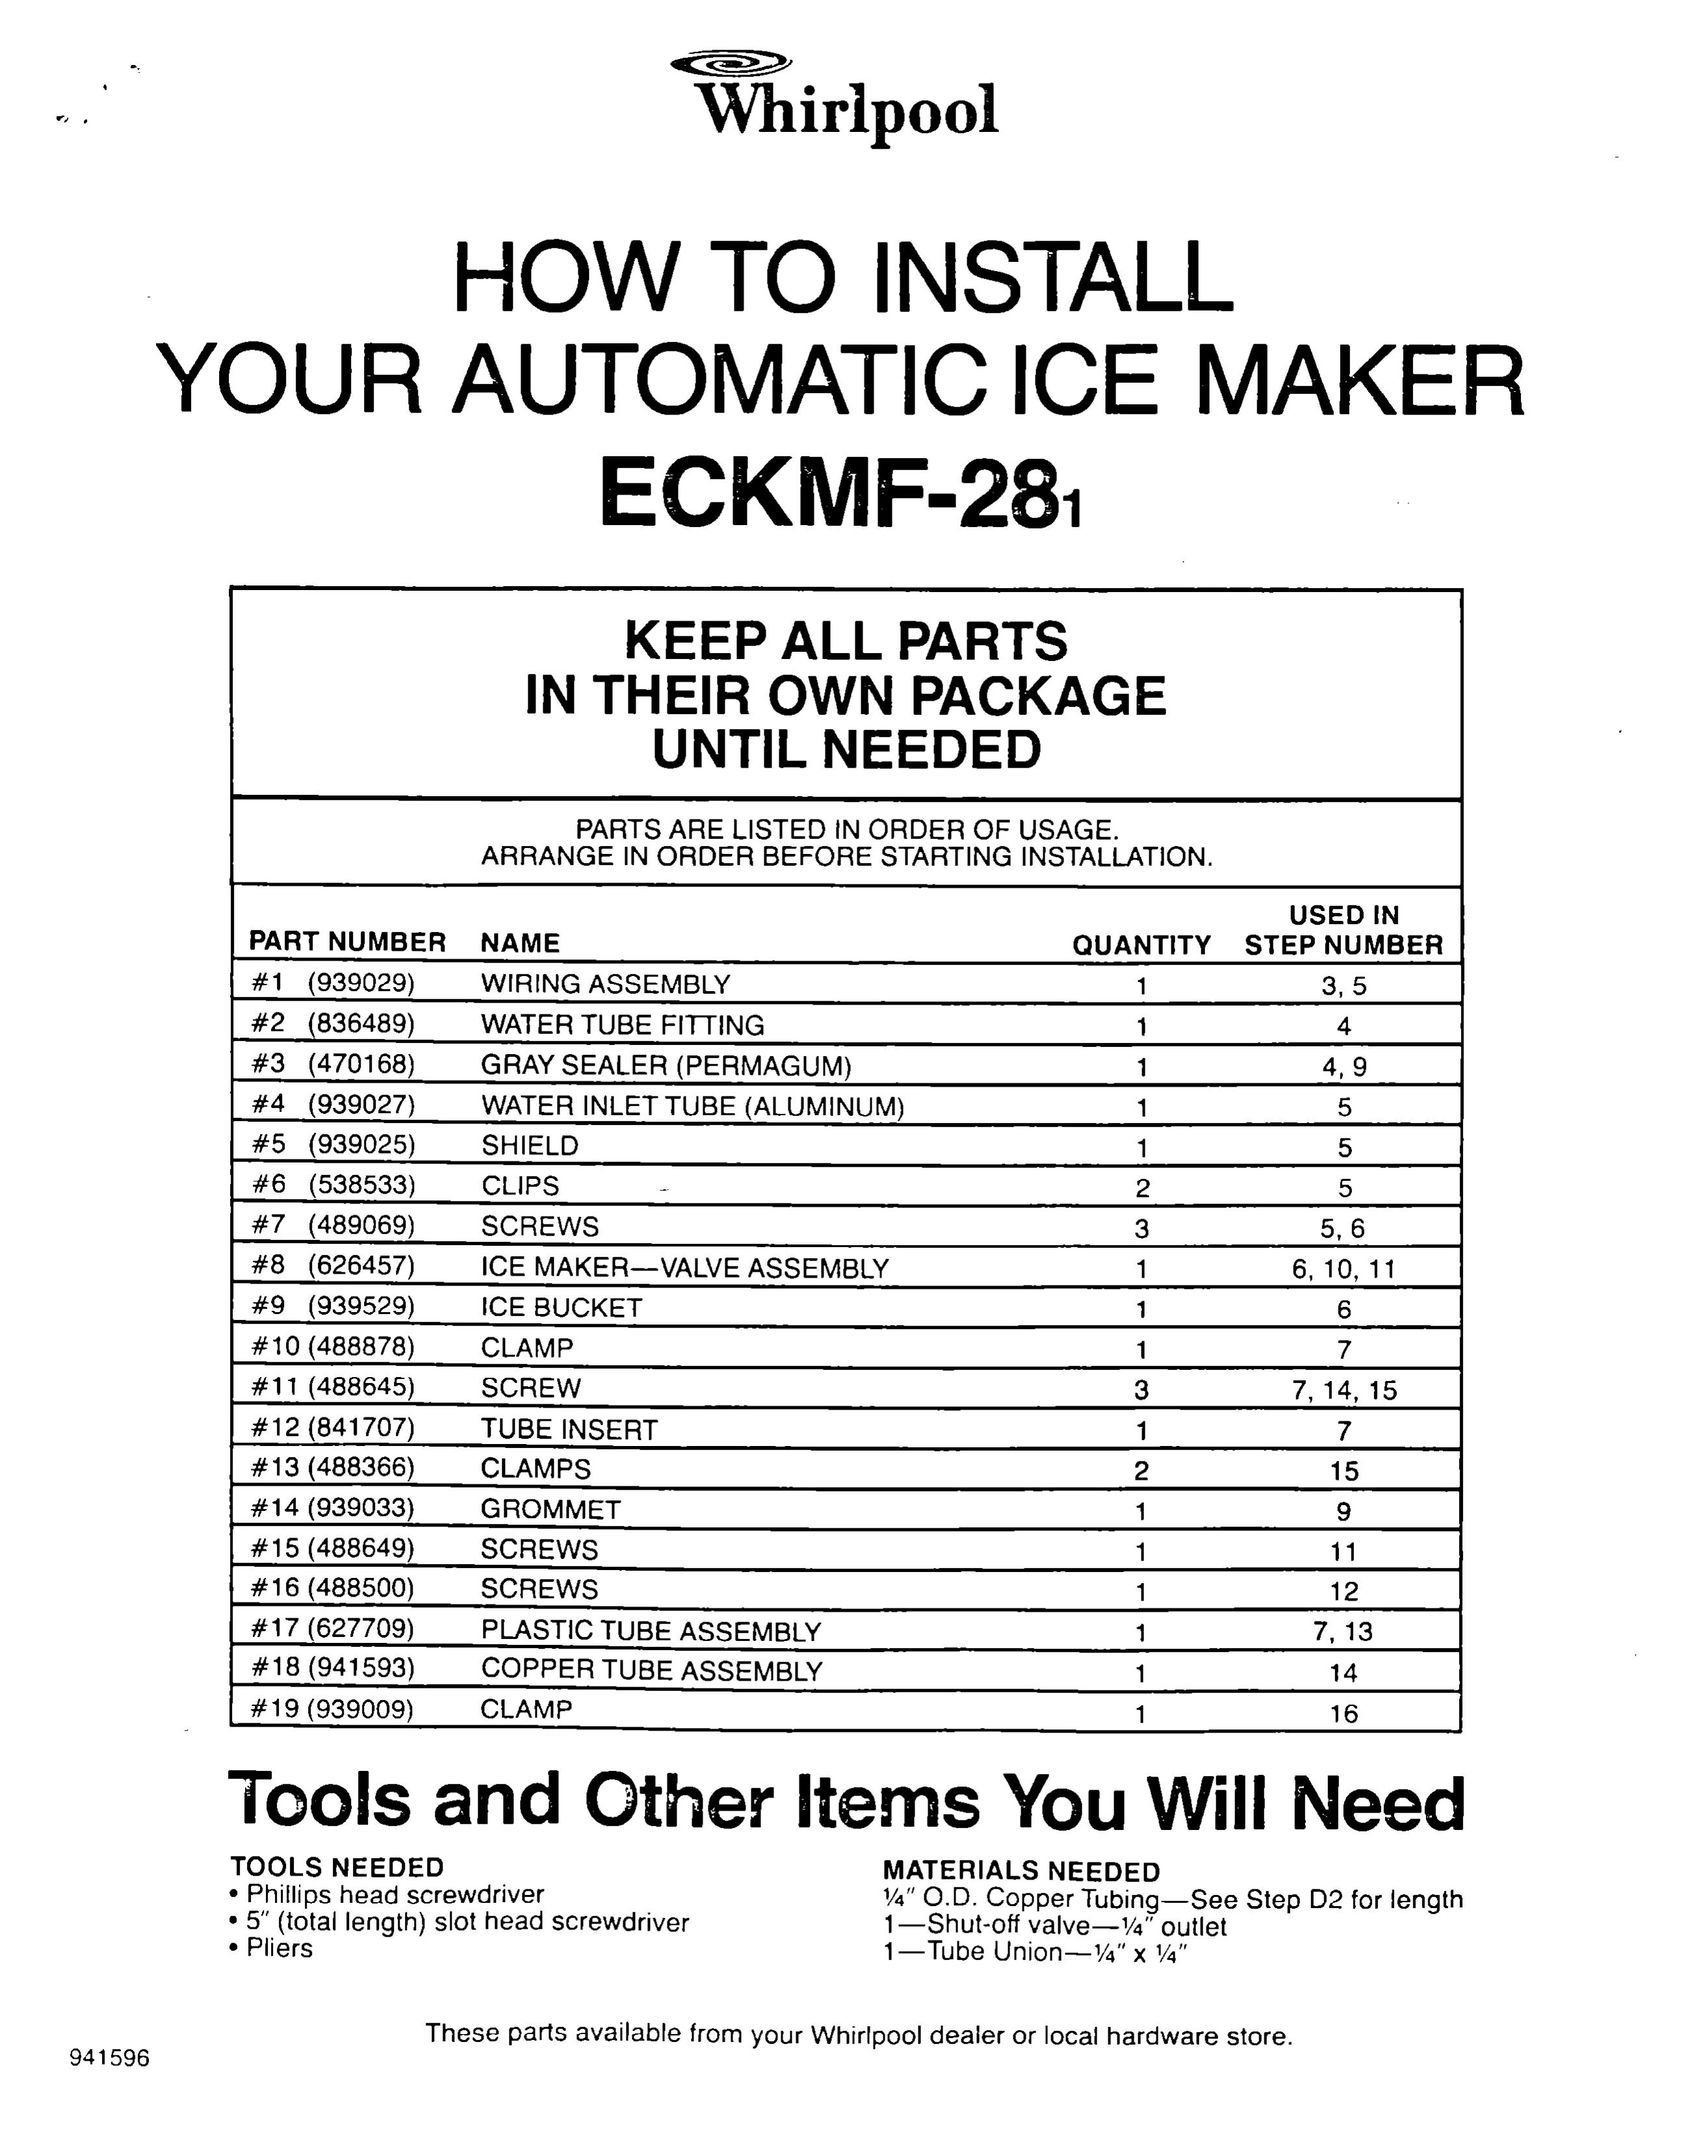 Whirlpool ECKMF-281 Ice Maker User Manual